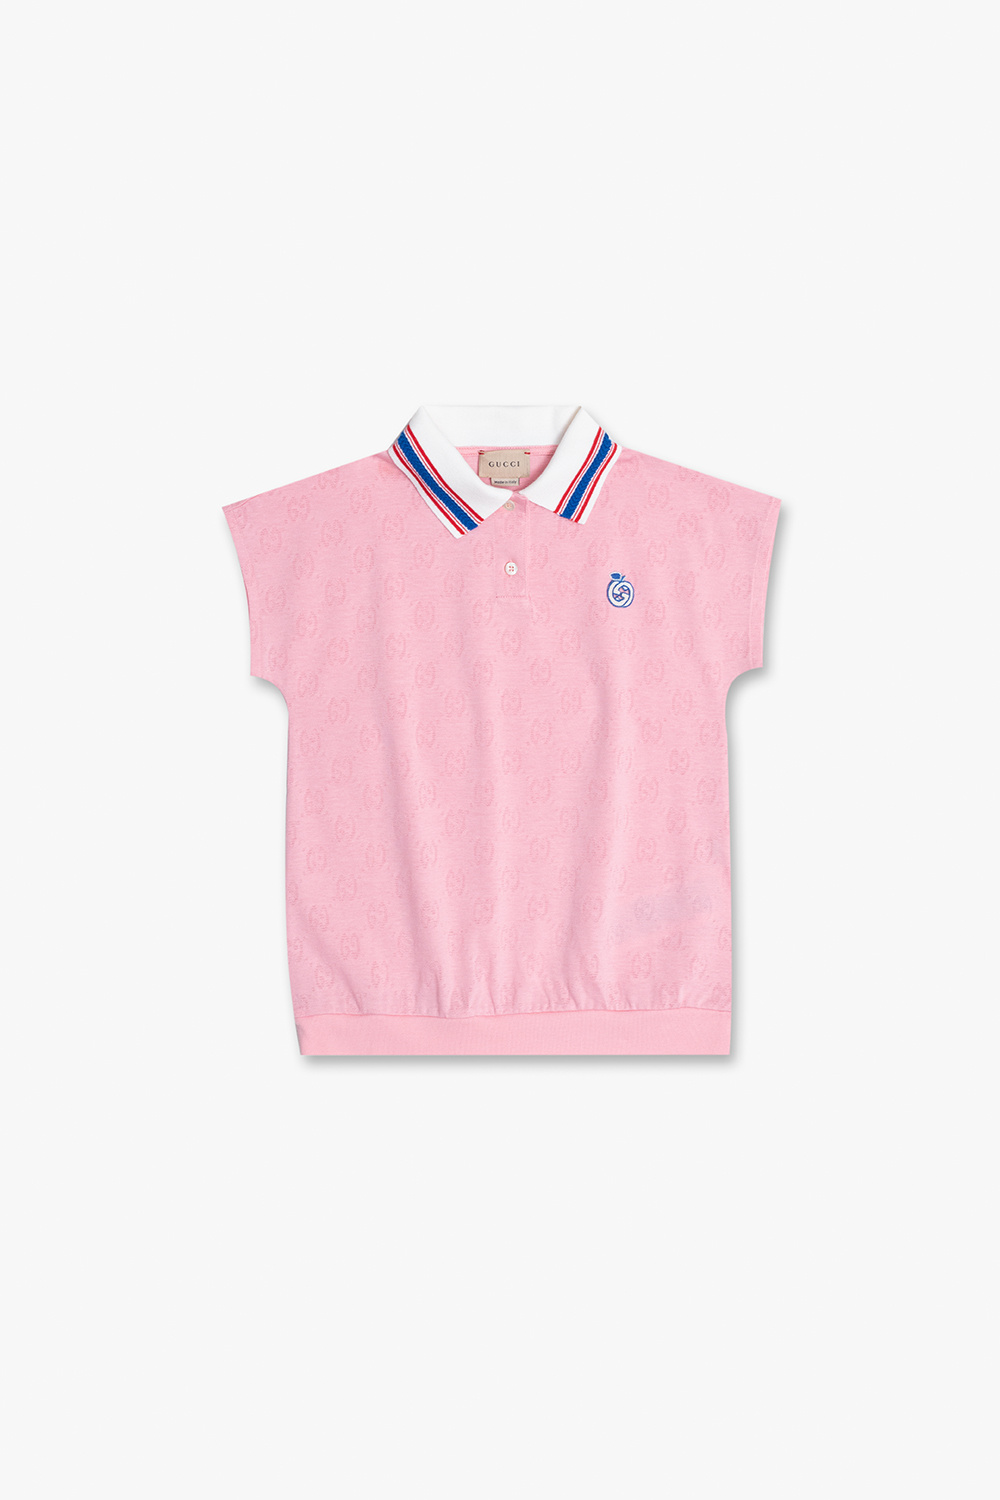 Interlocking G logo-print polo shirt, Gucci Kids